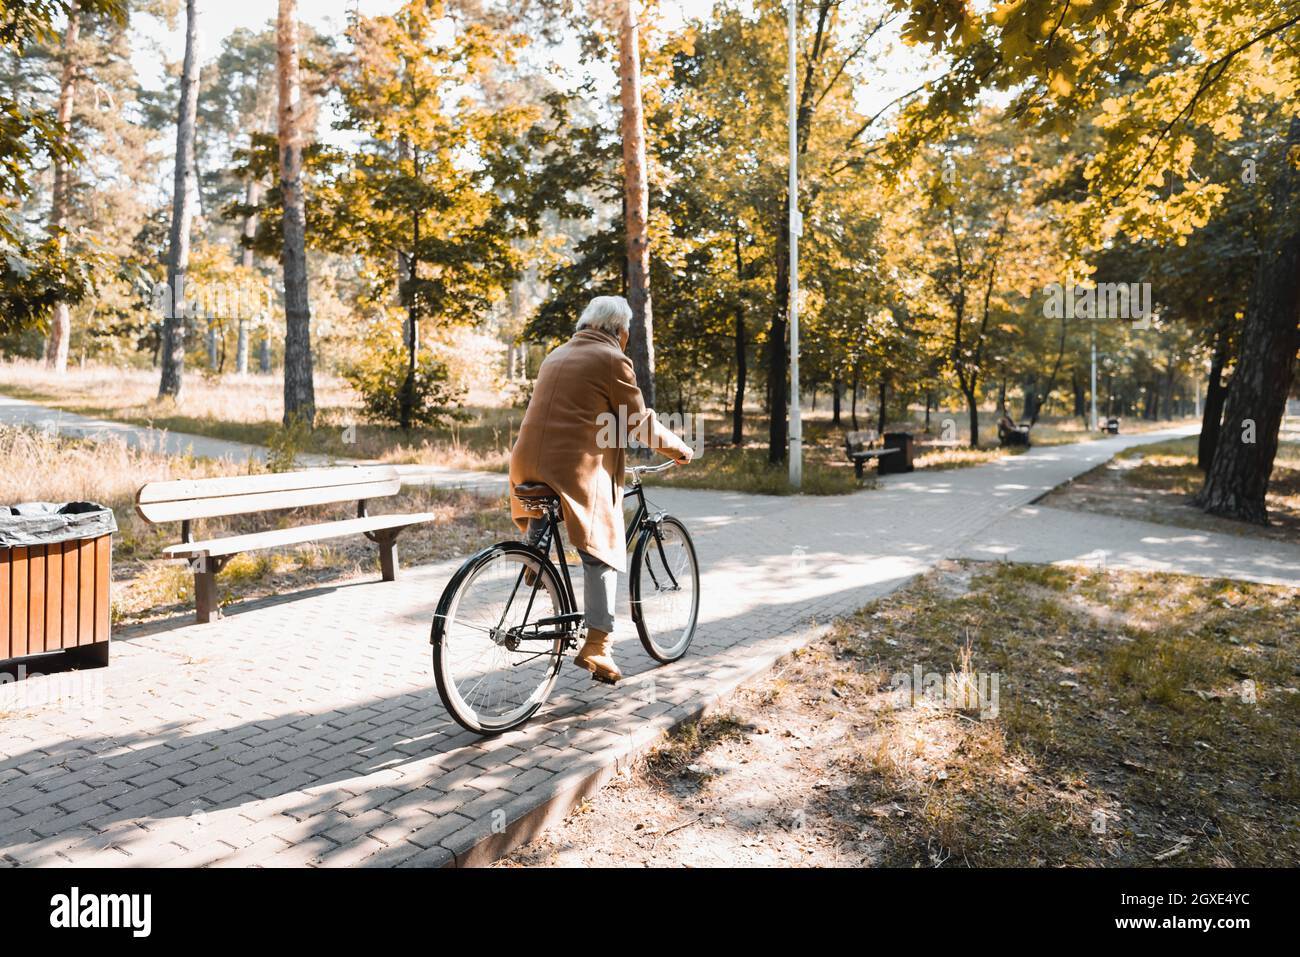 Elderly man riding bicycle in autumn park Stock Photo